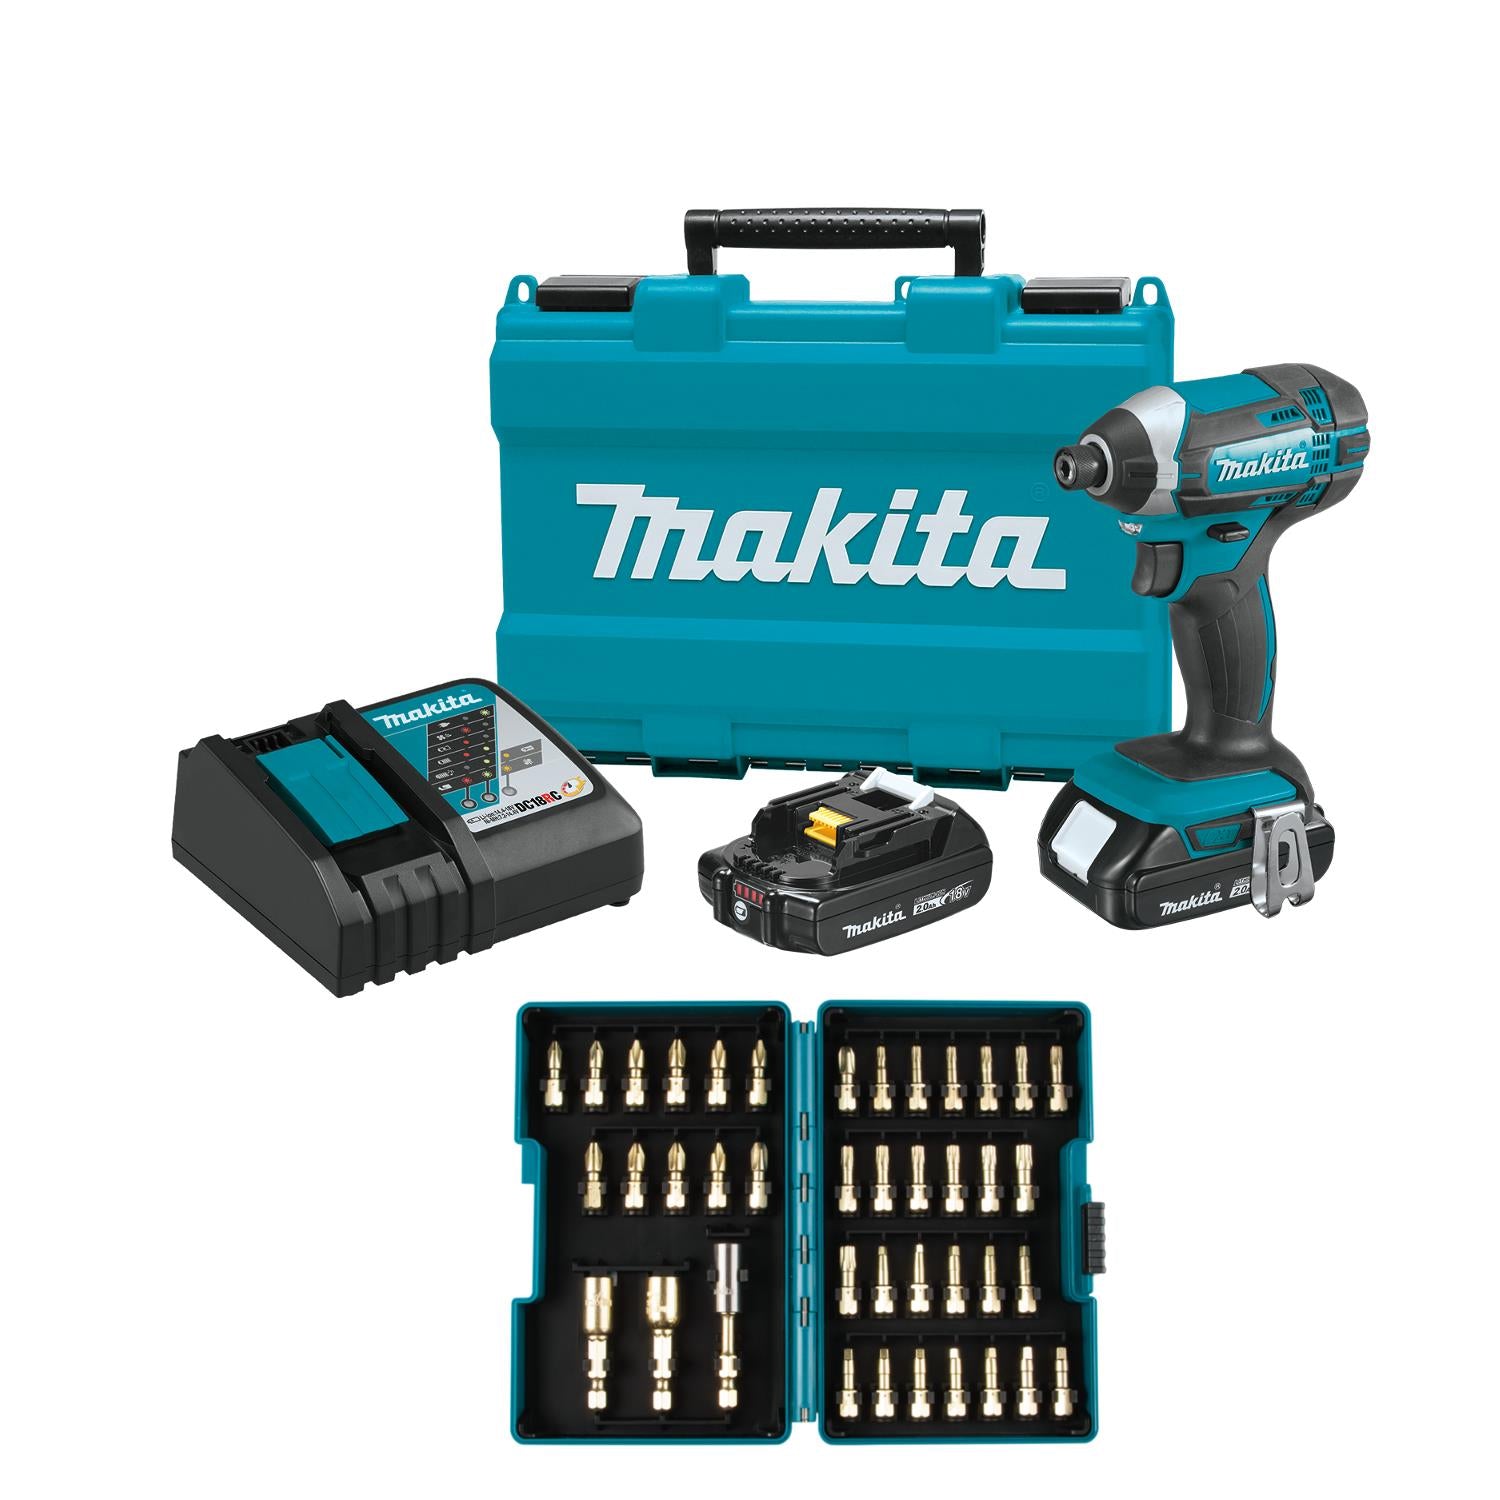 Makita 3-Tool Combo Kit Review - LXT 18V Lithium Ion